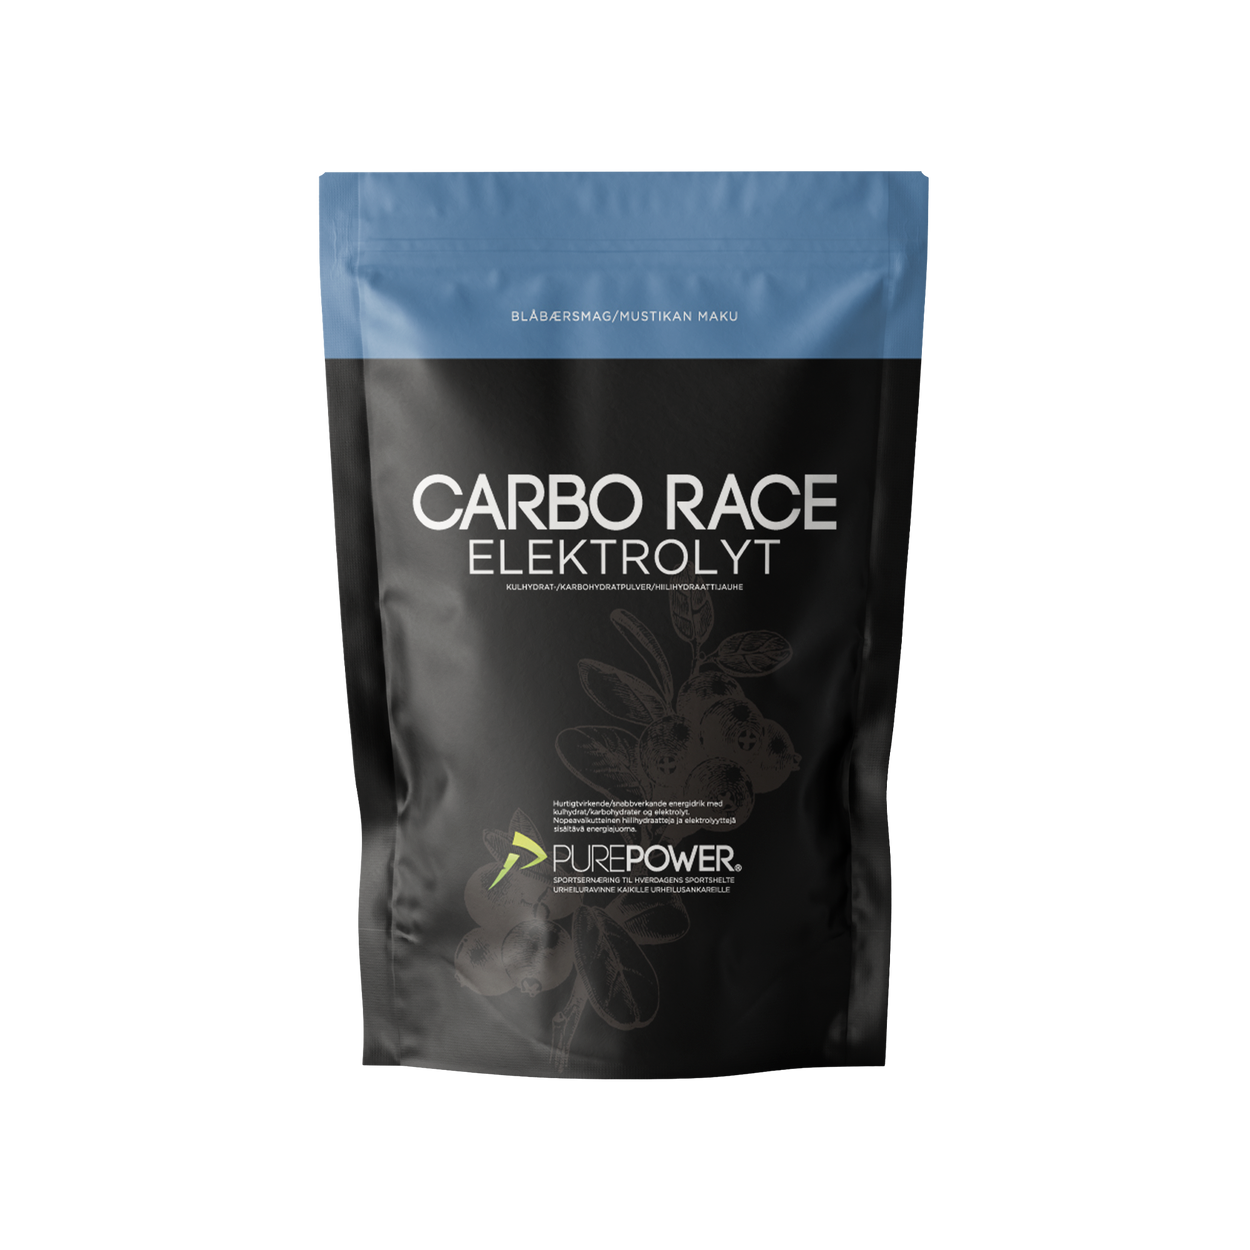 Carbo Race Elektrolyter Blåbär 1 kg